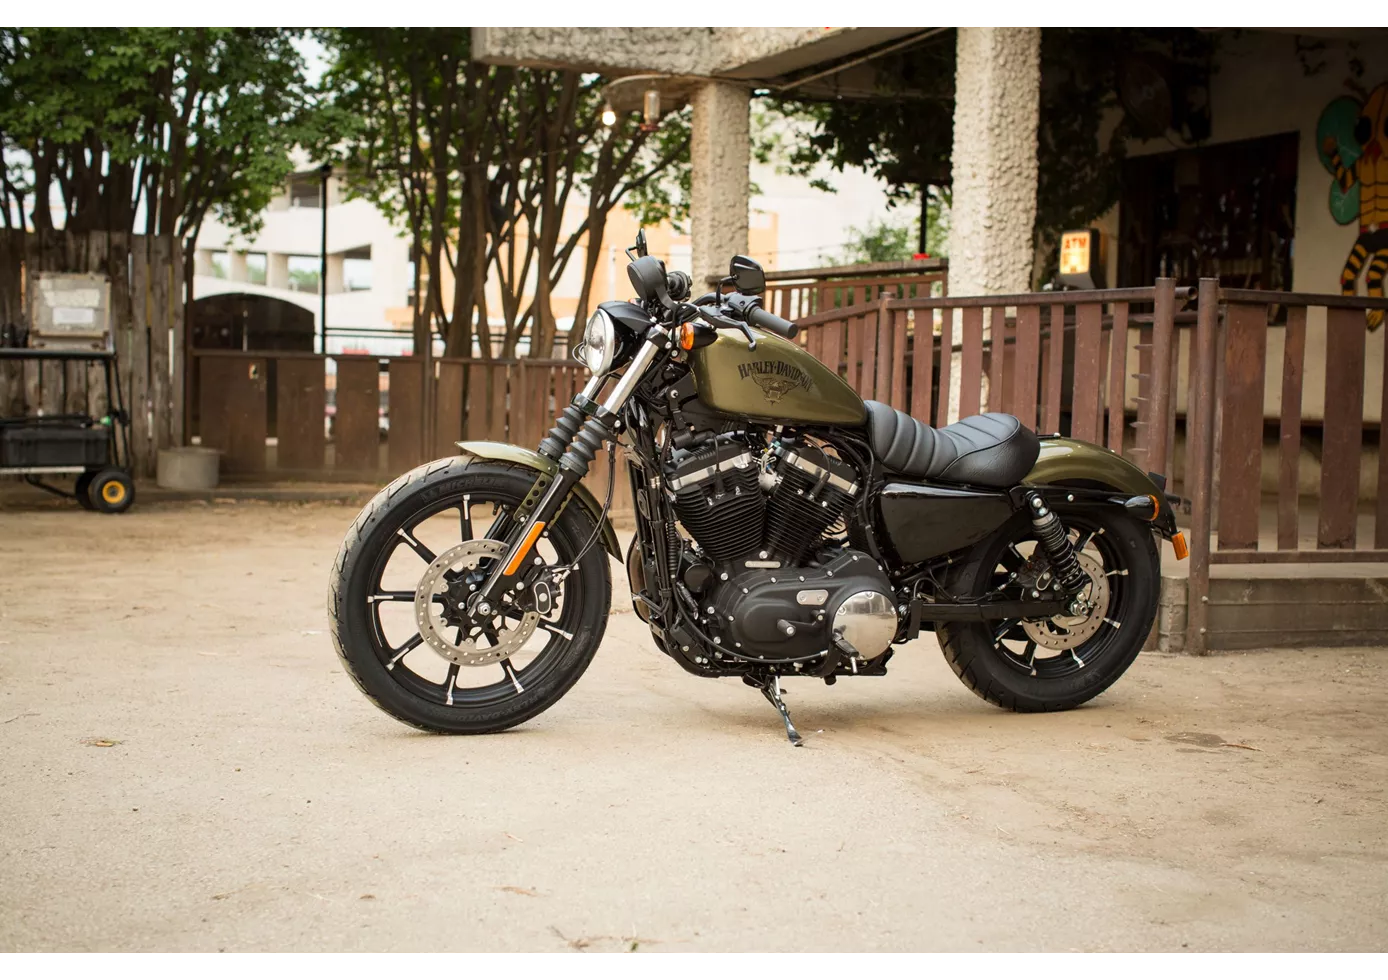 Harley-Davidson Sportster XL 883 N Iron 2017